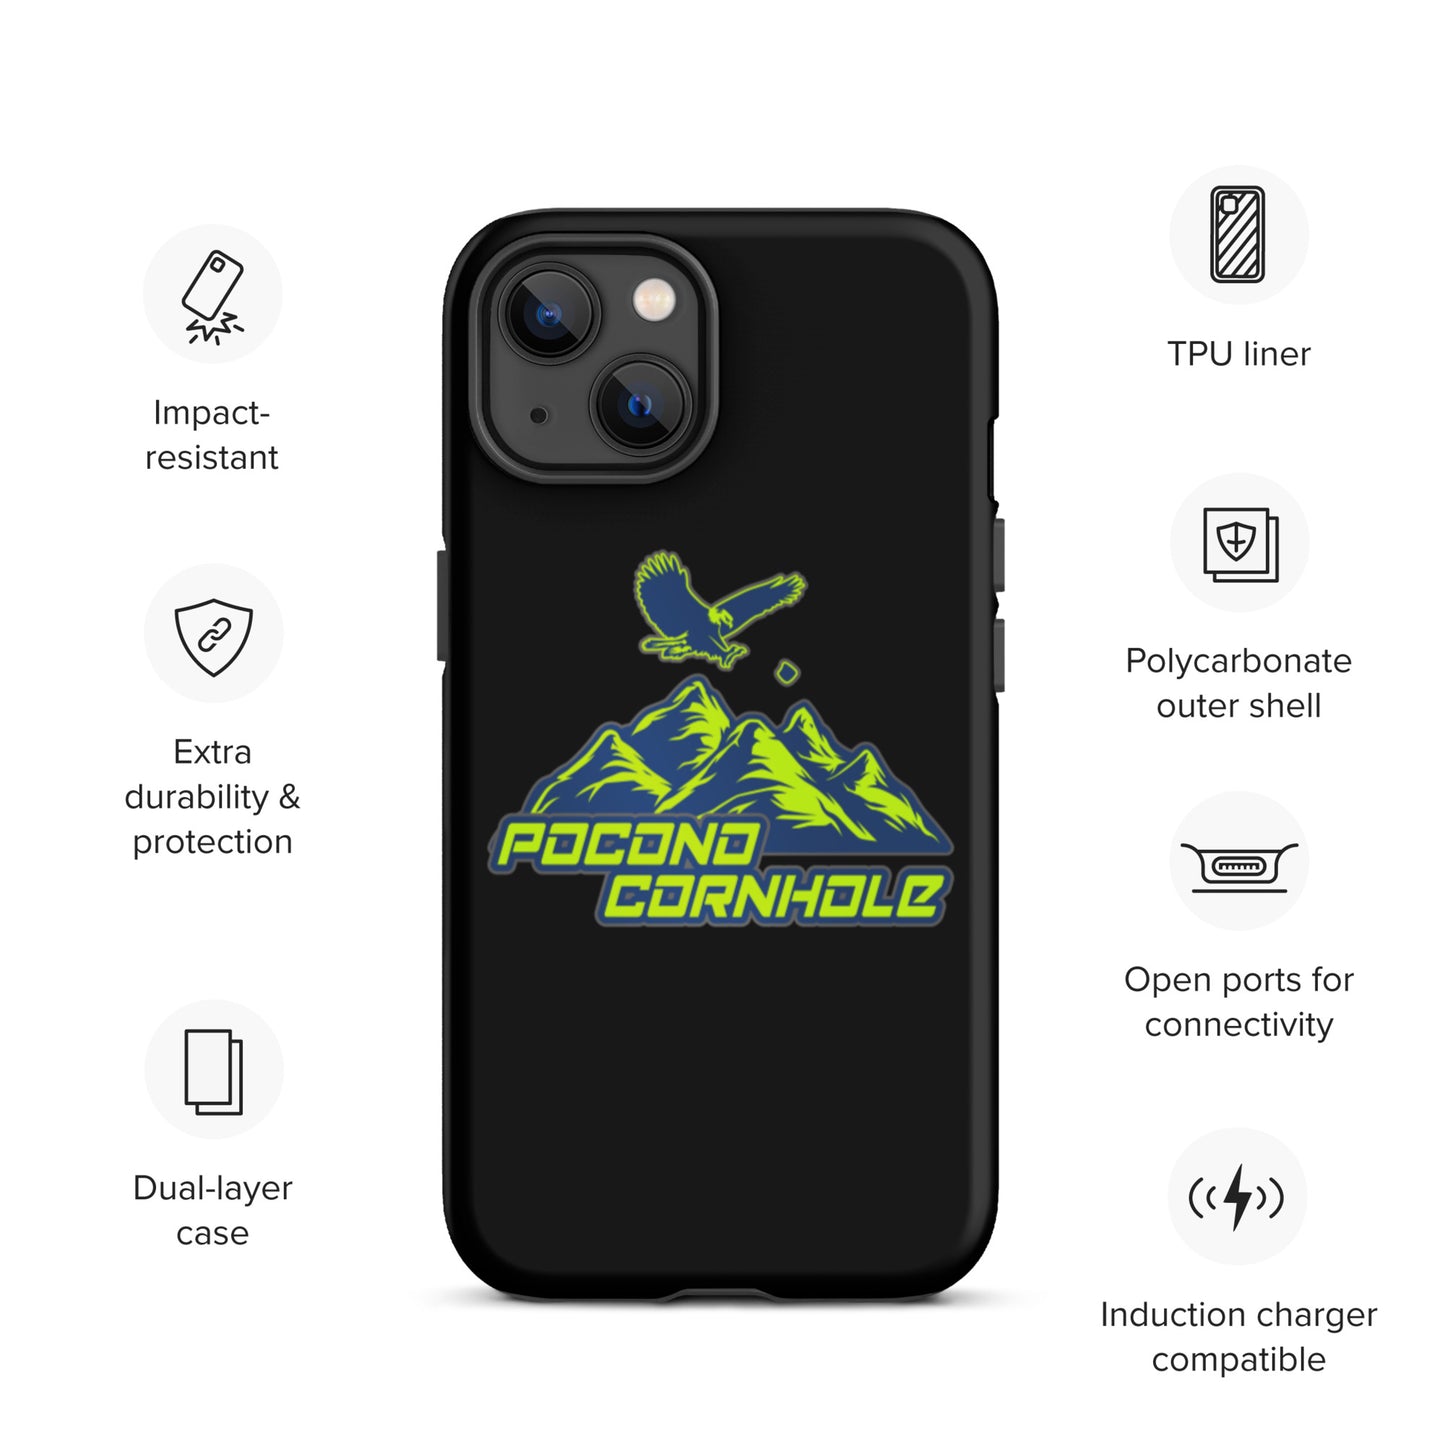 Pocono Cornhole Tough iPhone case